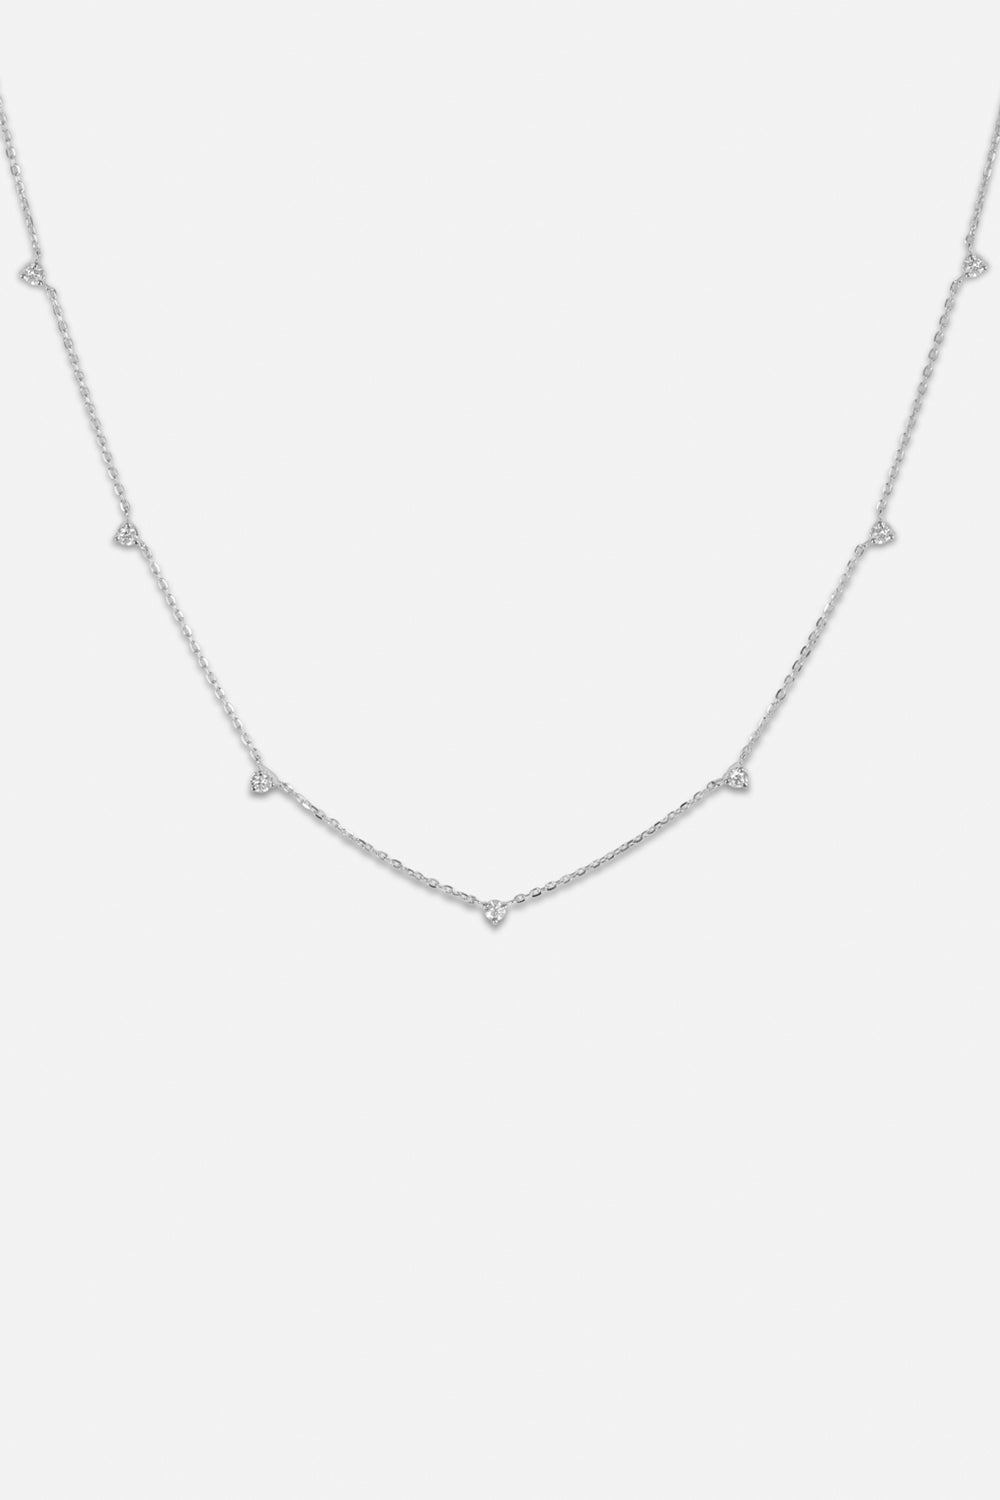 7 Round Diamond Necklace | White Gold